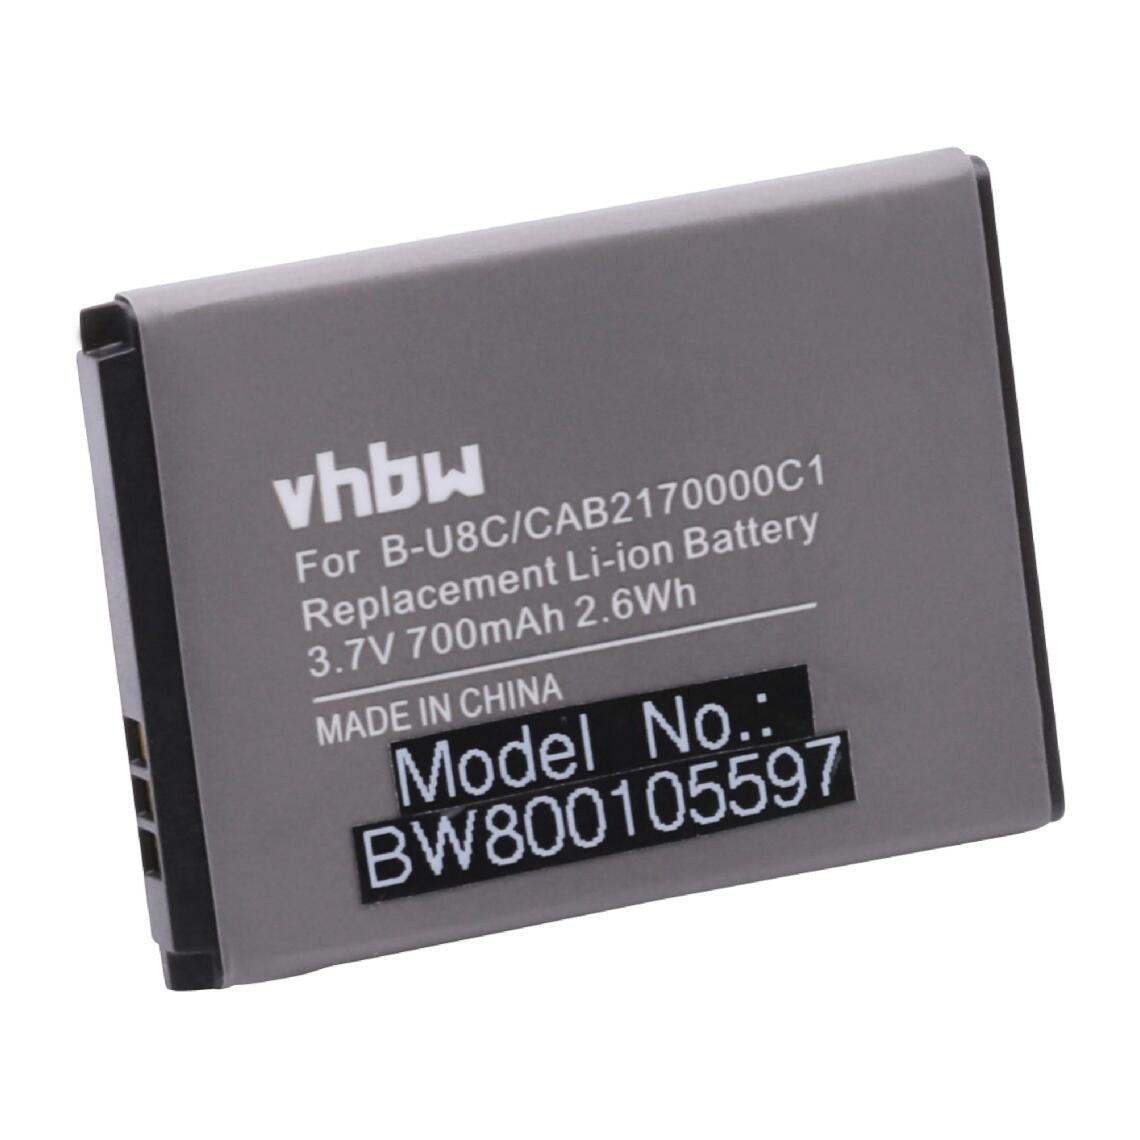 Vhbw - vhbw batterie compatible avec Alcatel One Touch 508PTT, 565A, 600A, 660A, 706A, F150, F250, OT-103 smartphone (700mAh, 3,7V, Li-Ion) - Batterie téléphone